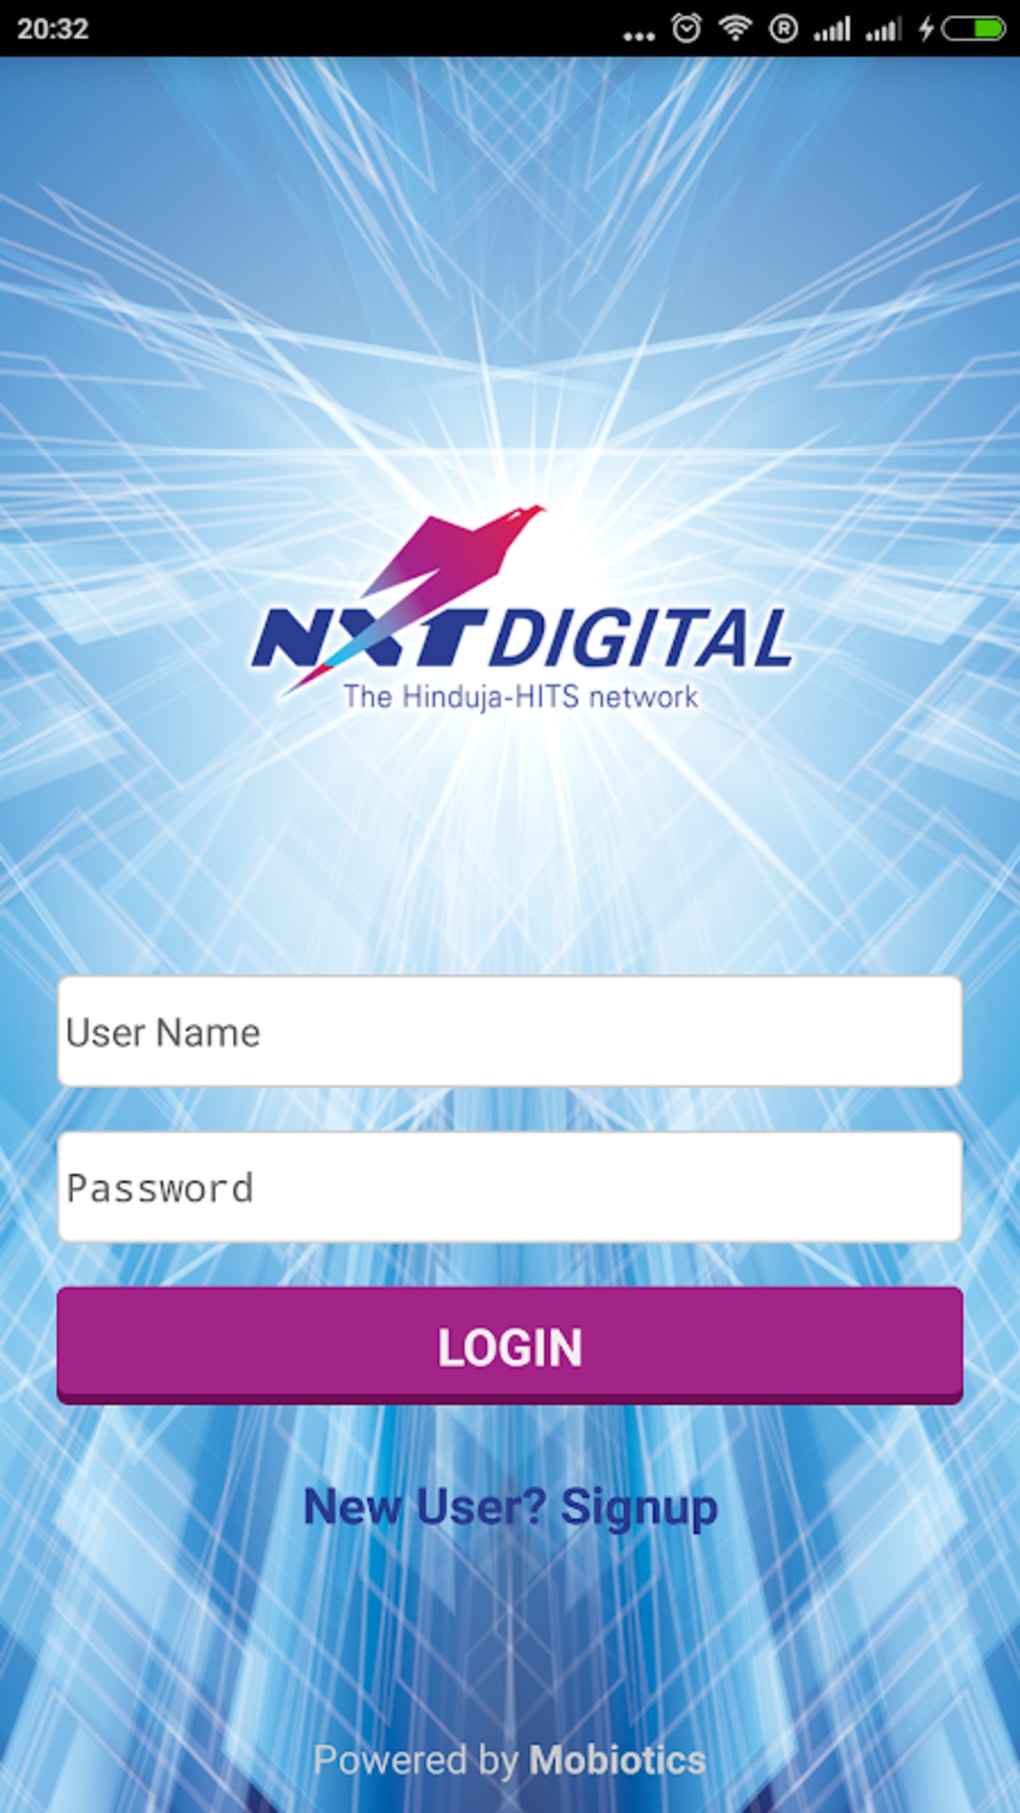 Nxt digital lco portal app